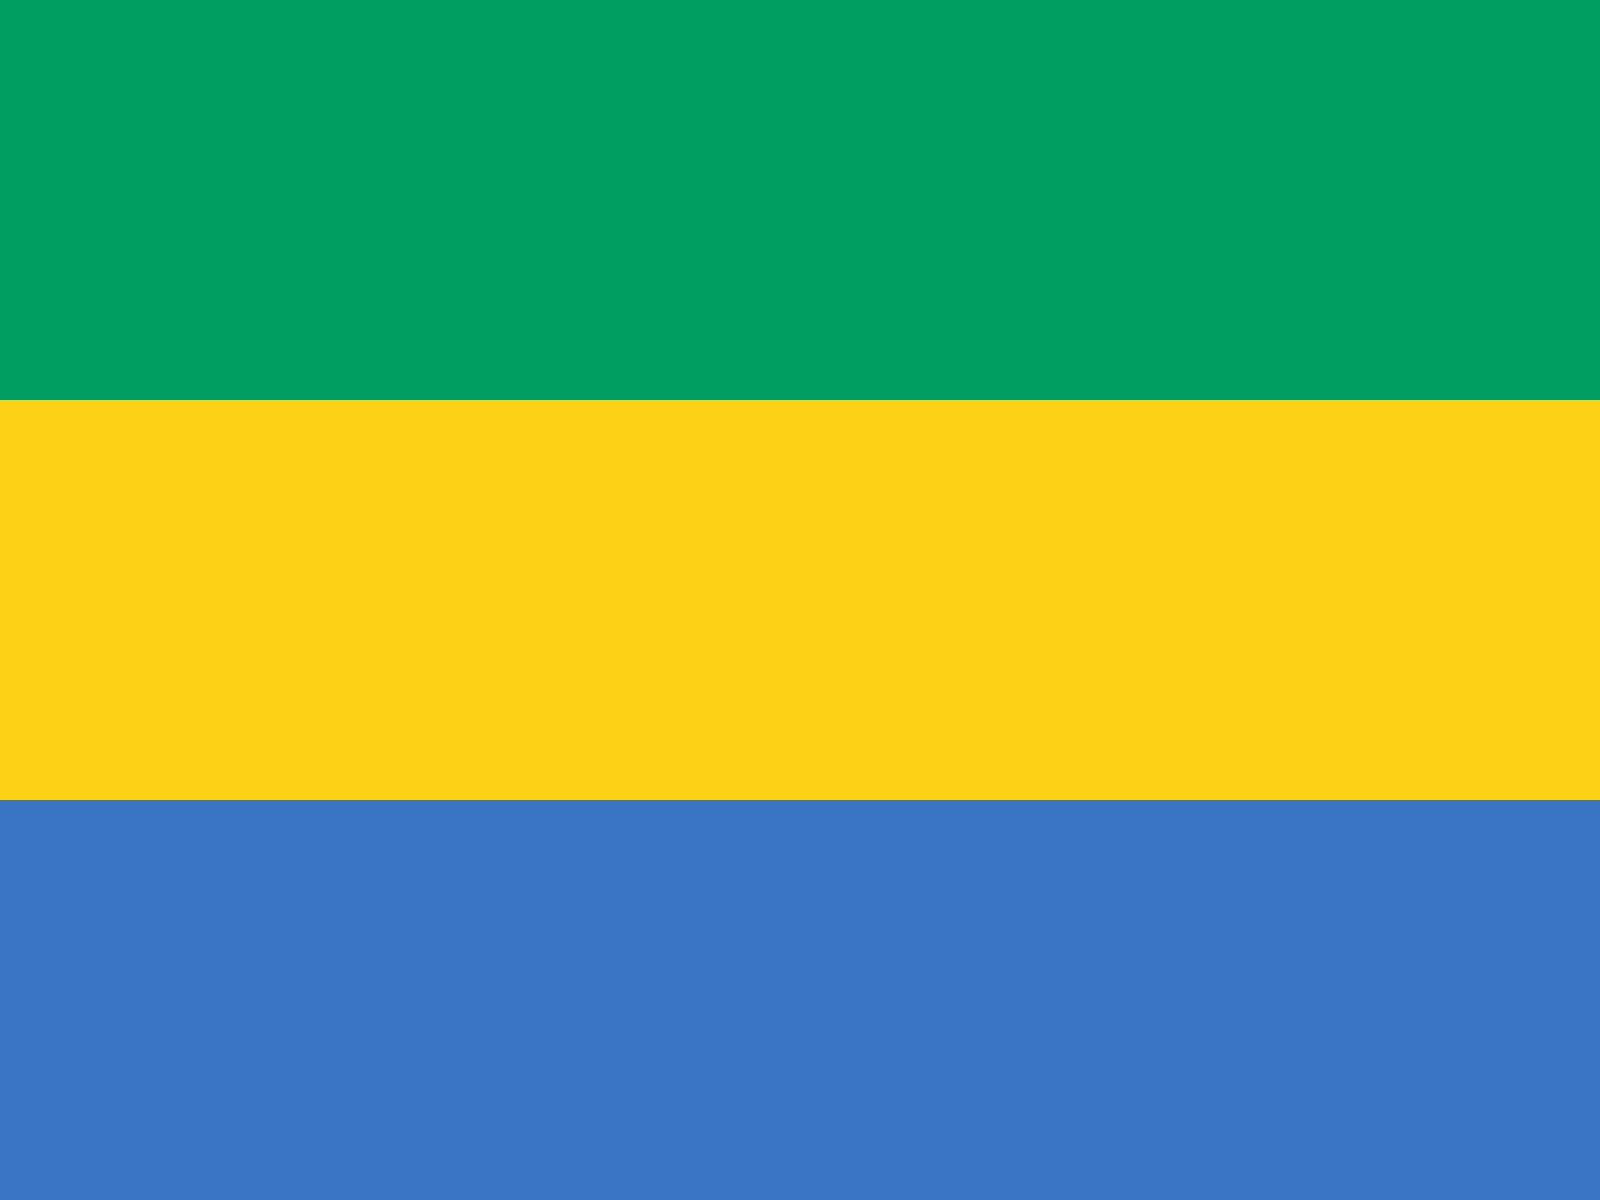 Facts about Gabon